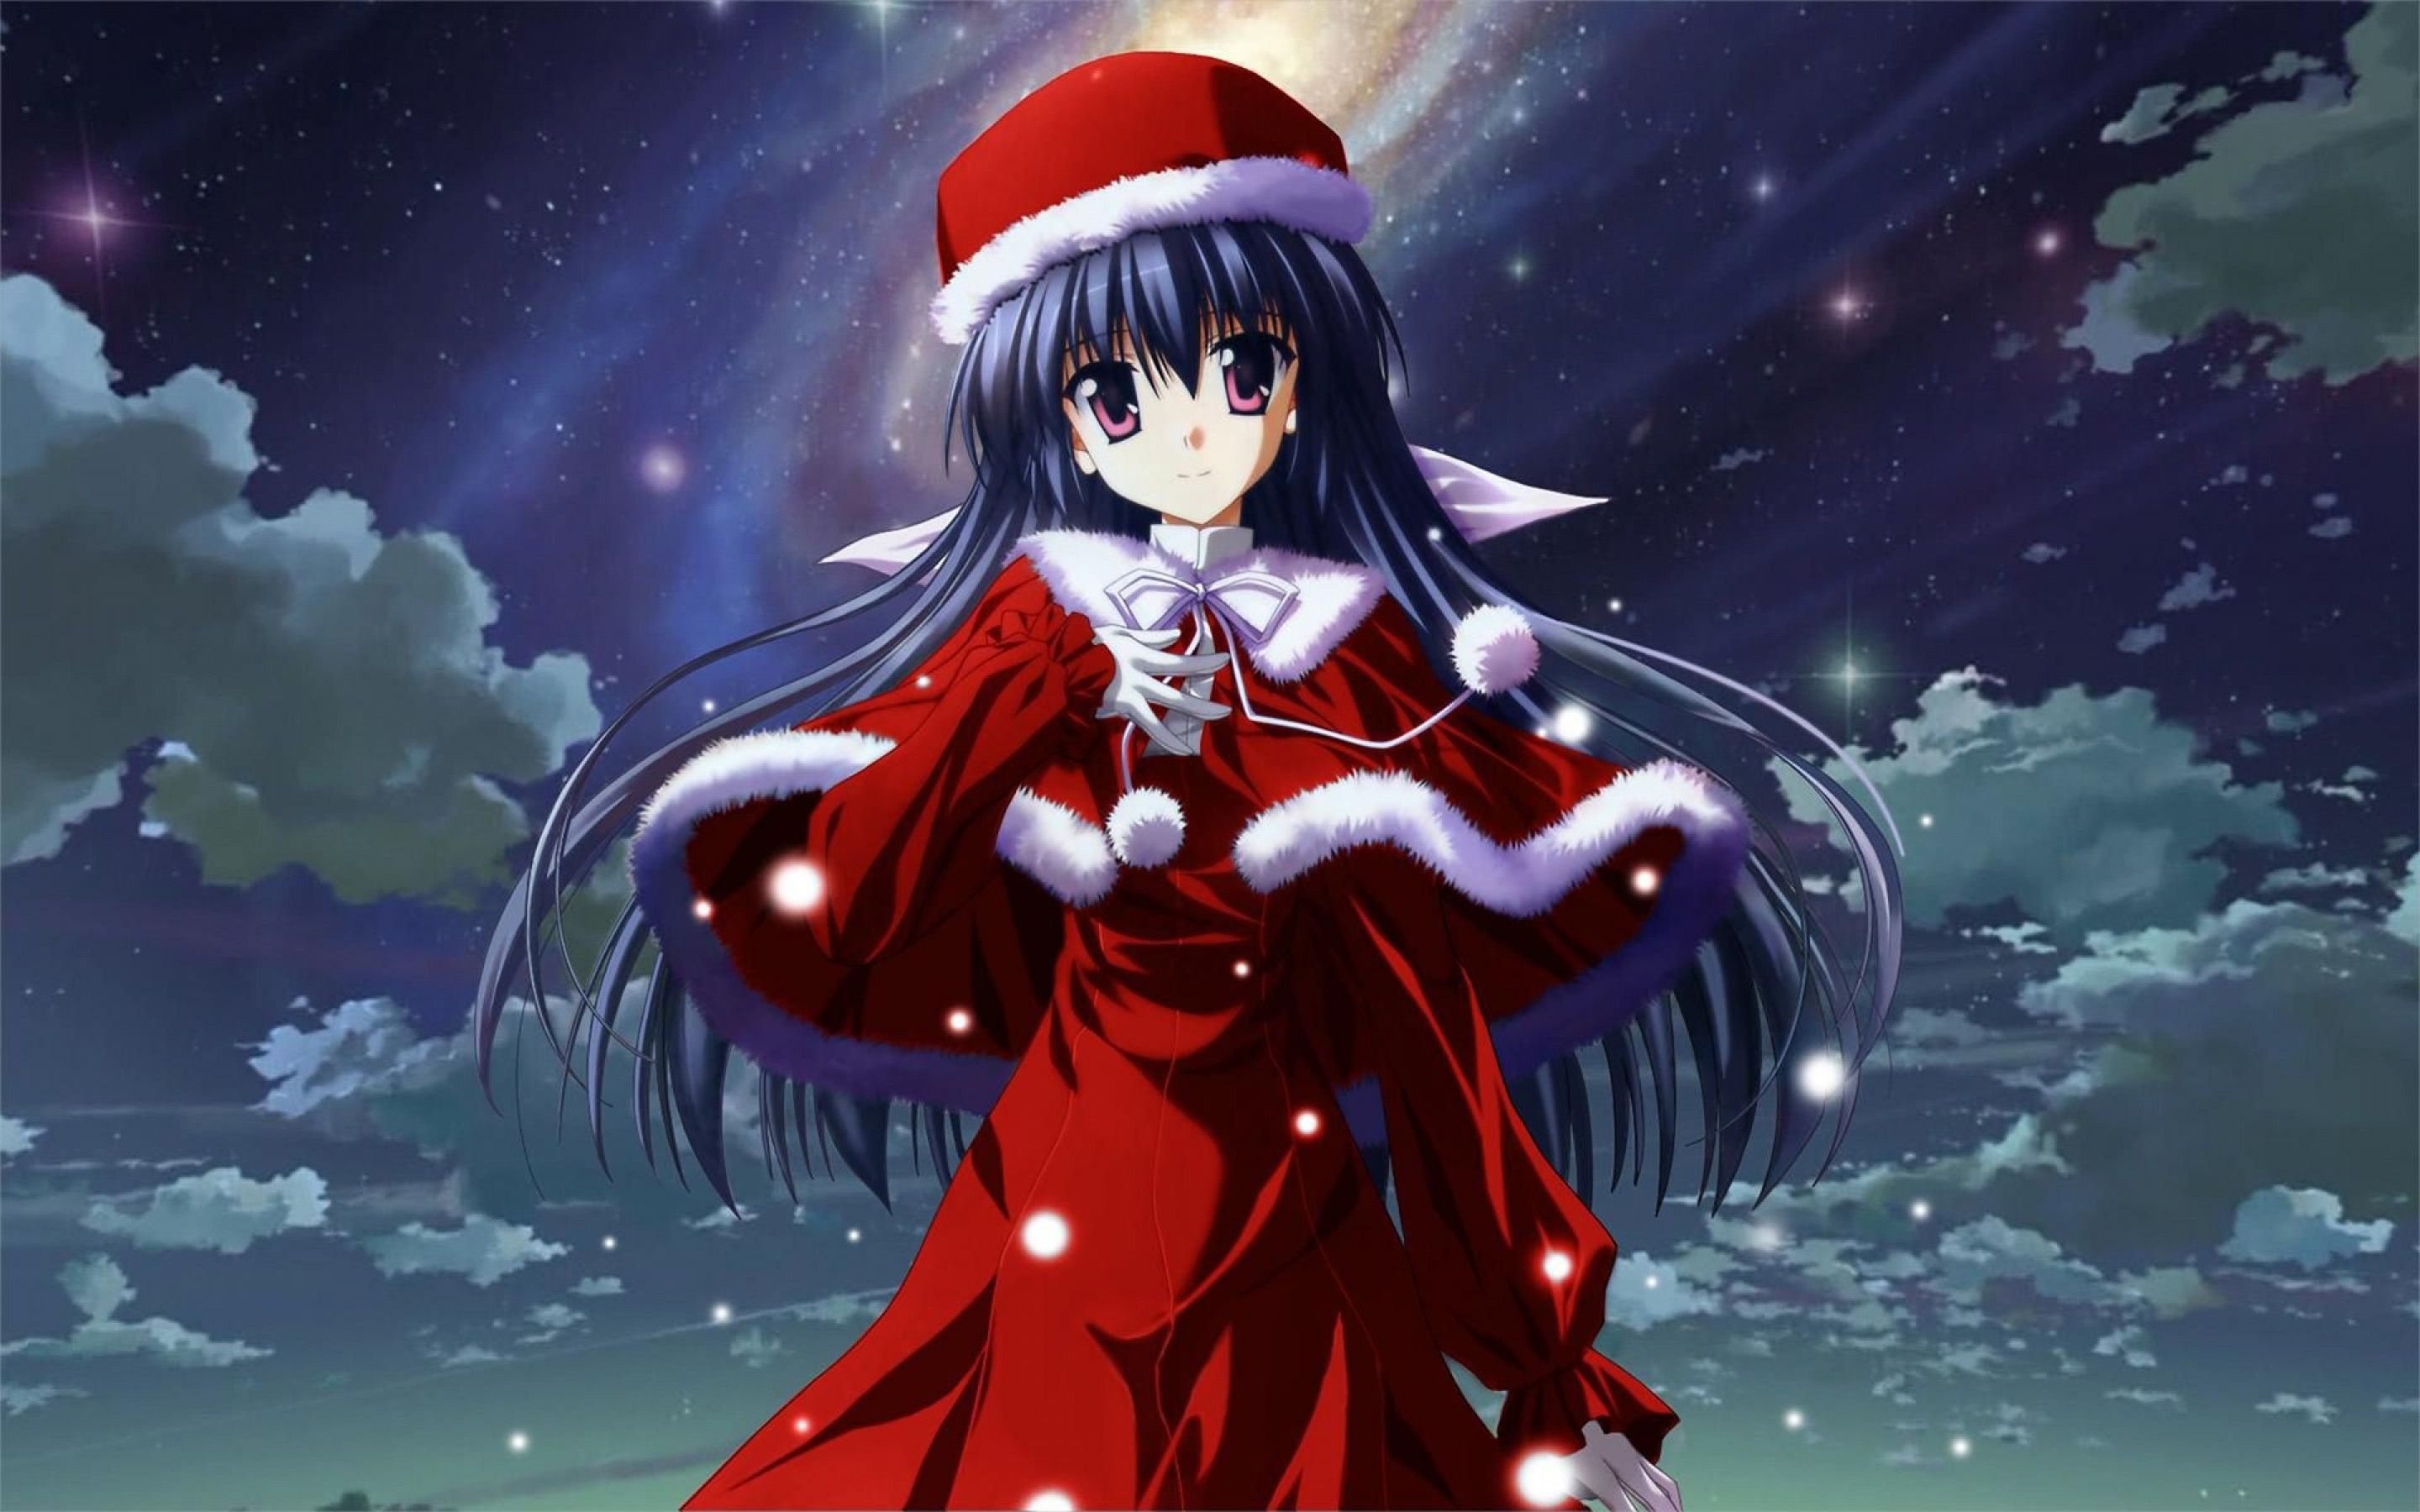 Cute Christmas Anime Girl Aesthetic.